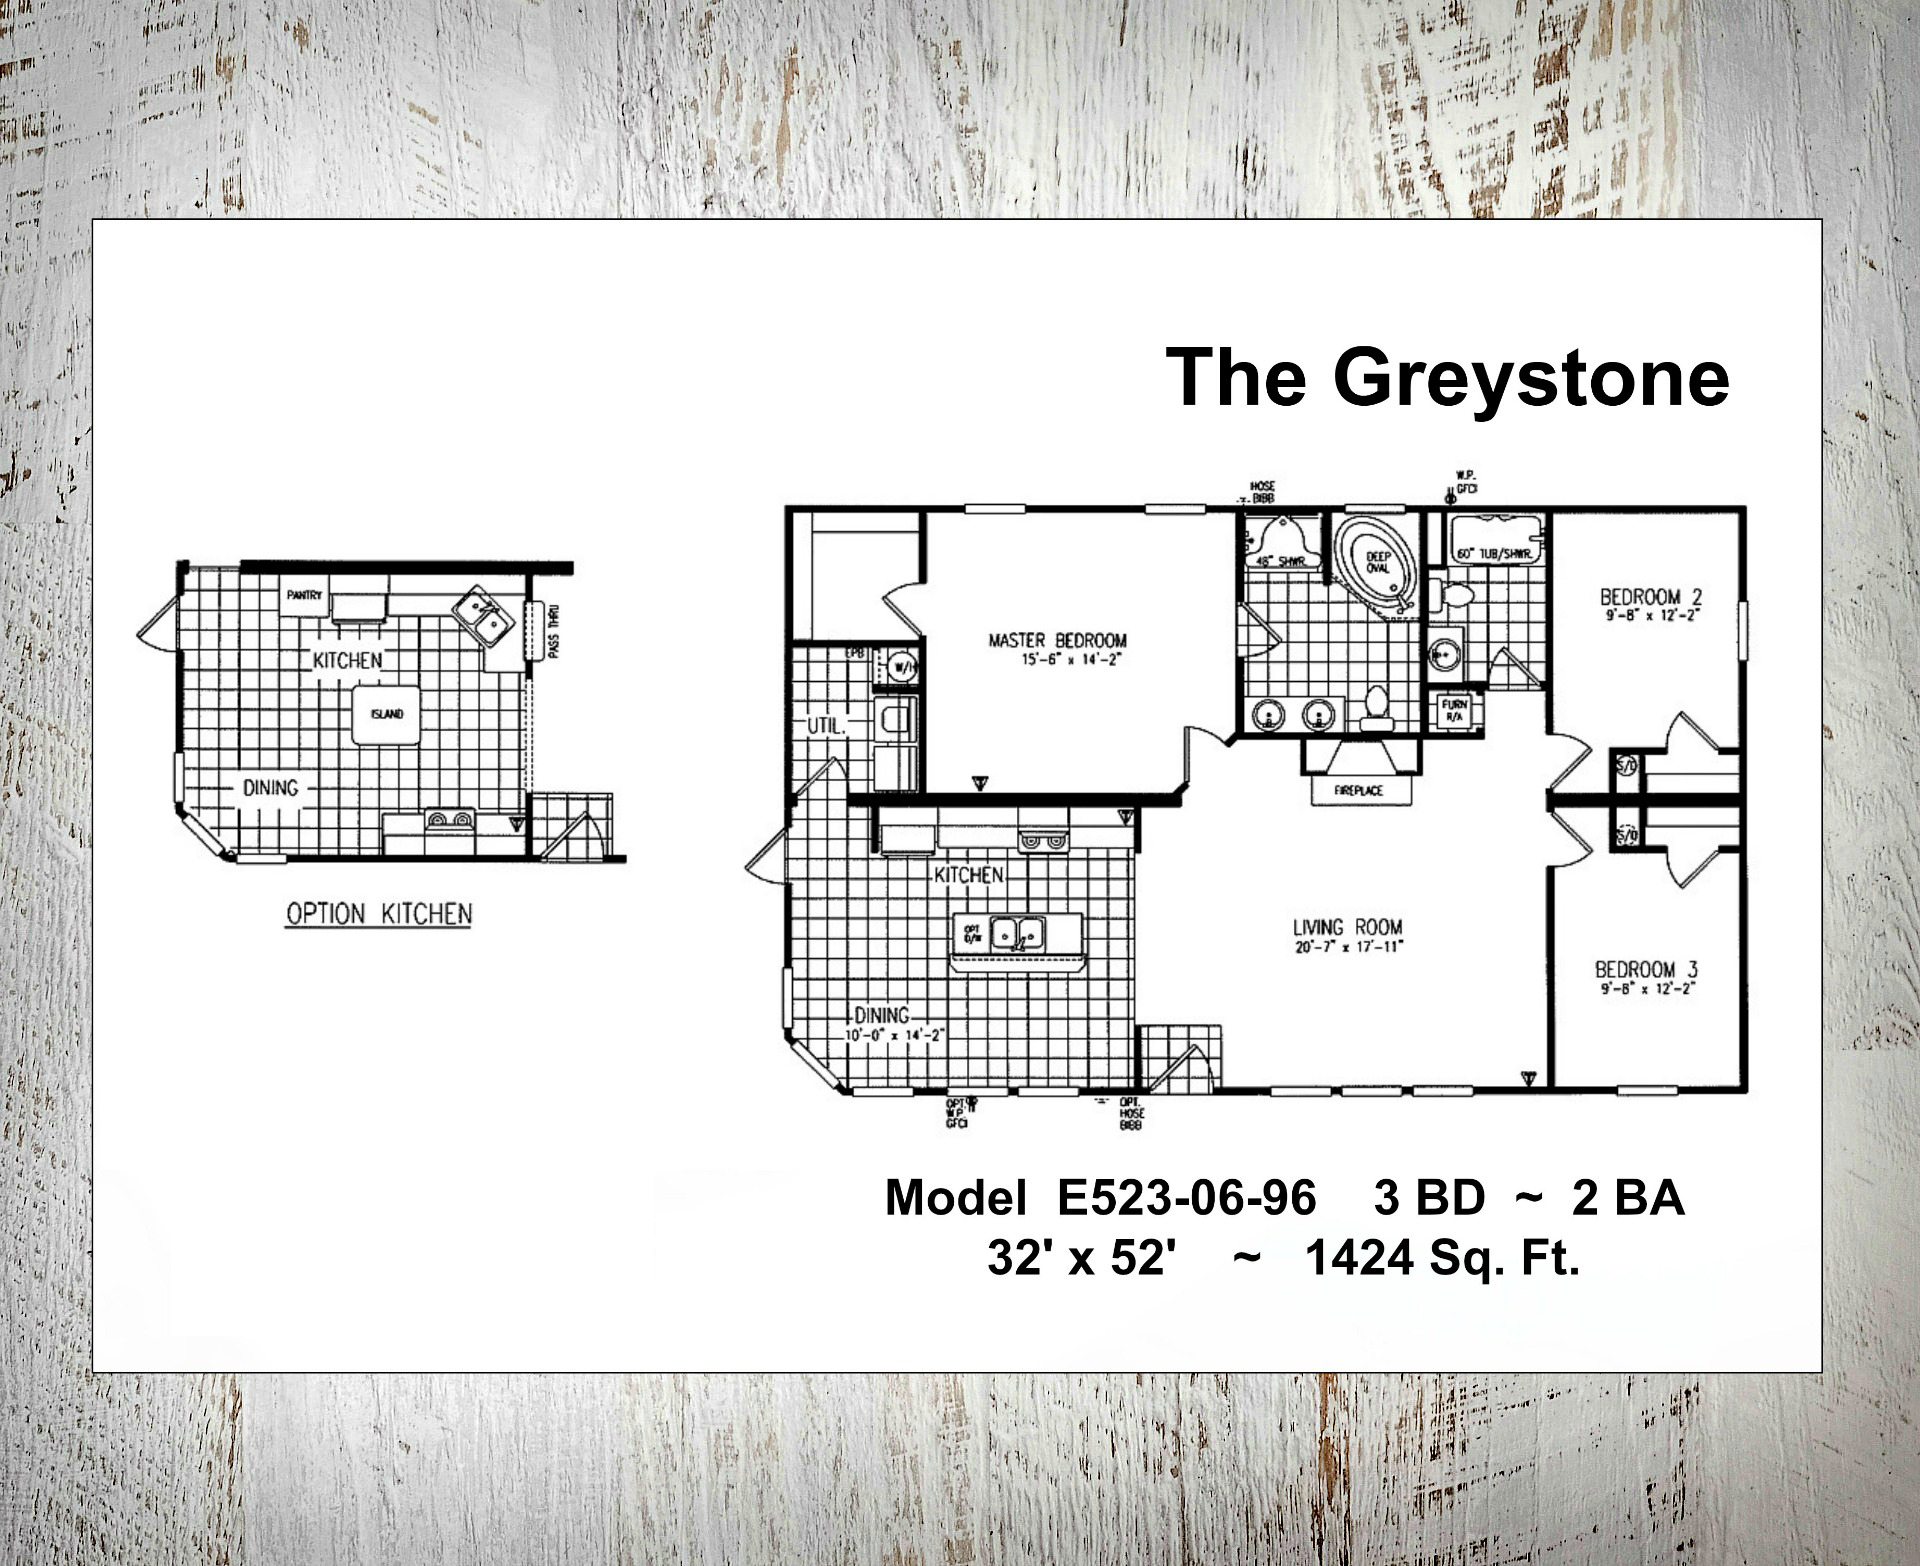 The Greystone Floorplan